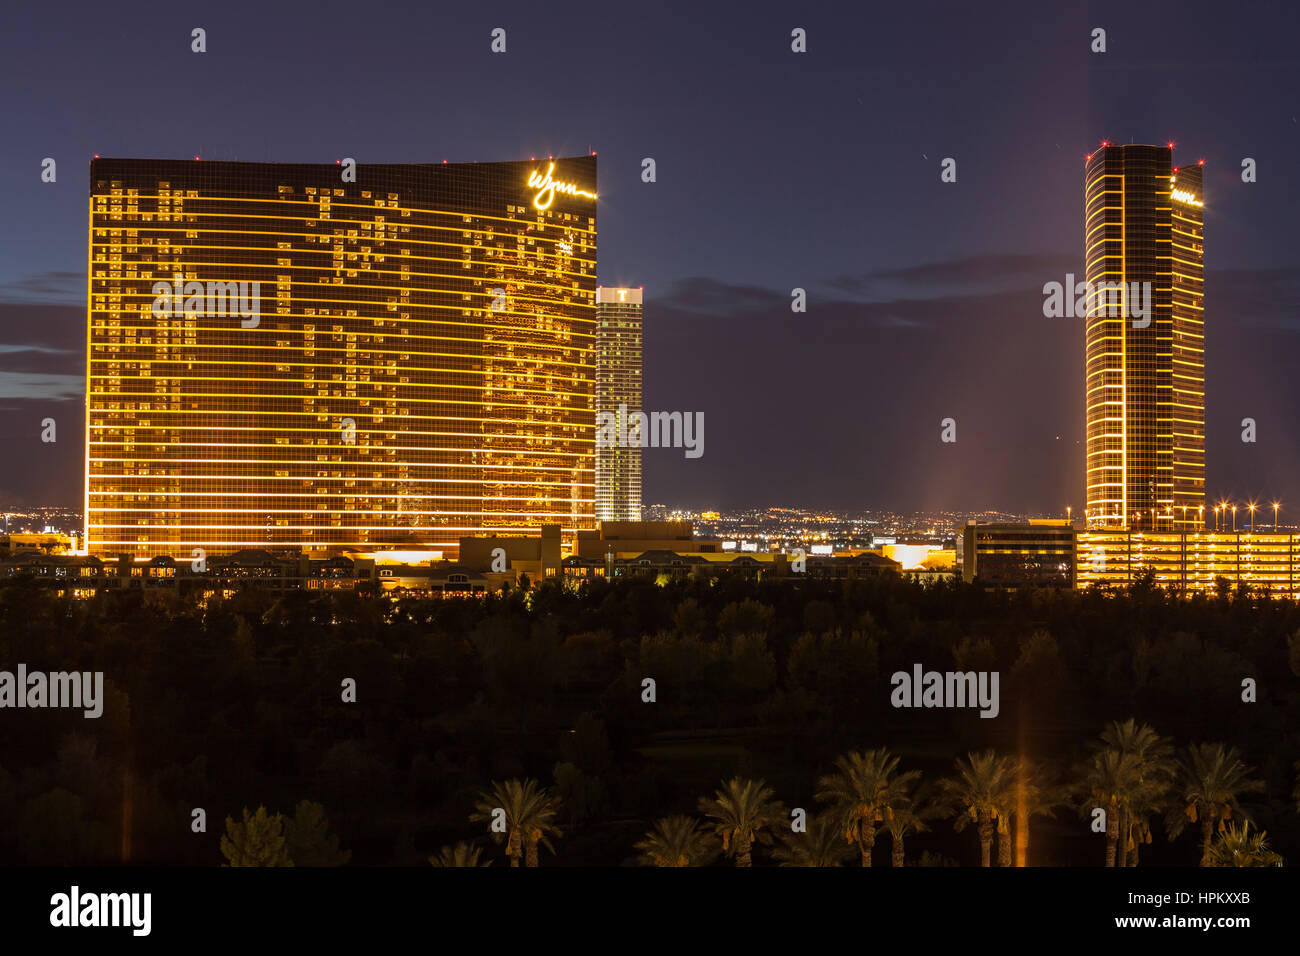 Editorial dusk view of the popular upscale Wynn casino resort on the Las Vegas strip. Stock Photo